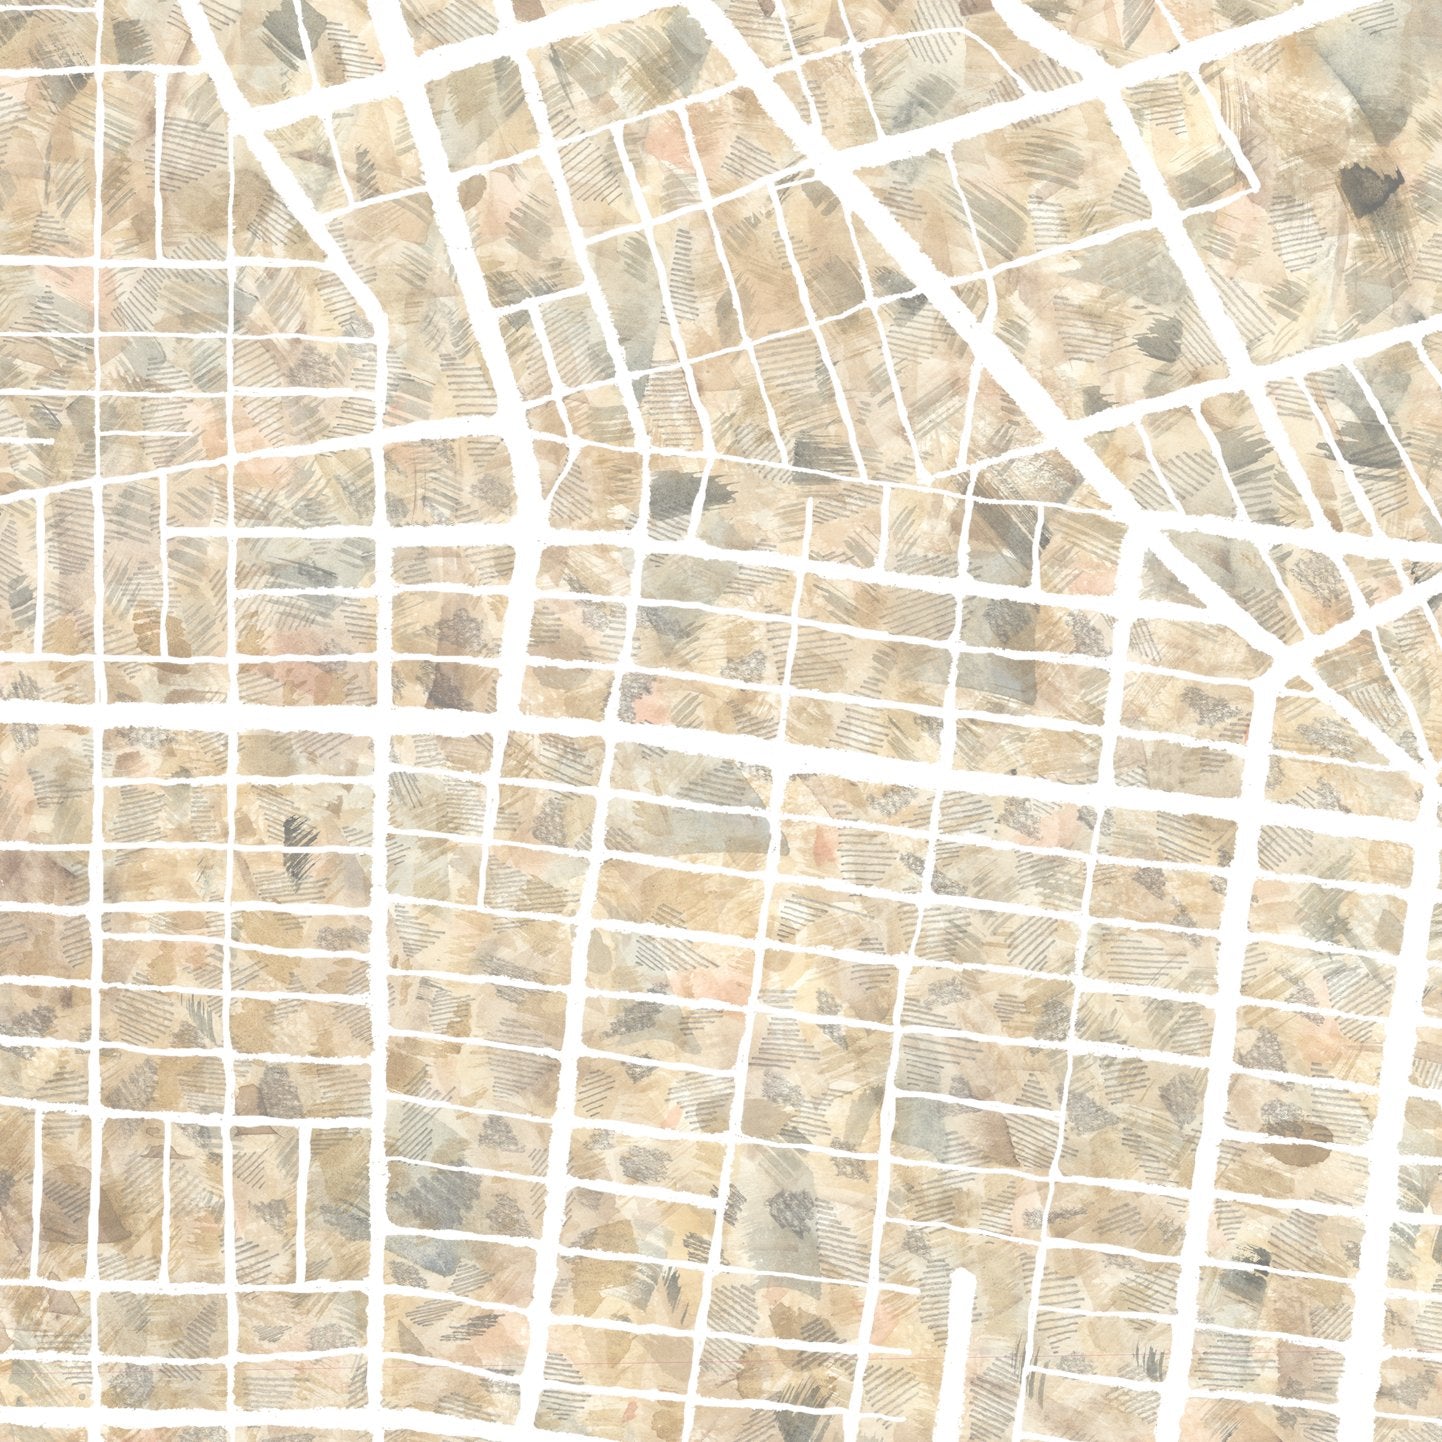 BROOKLYN HEIGHTS, Urban Fabrics City Map: PRINT